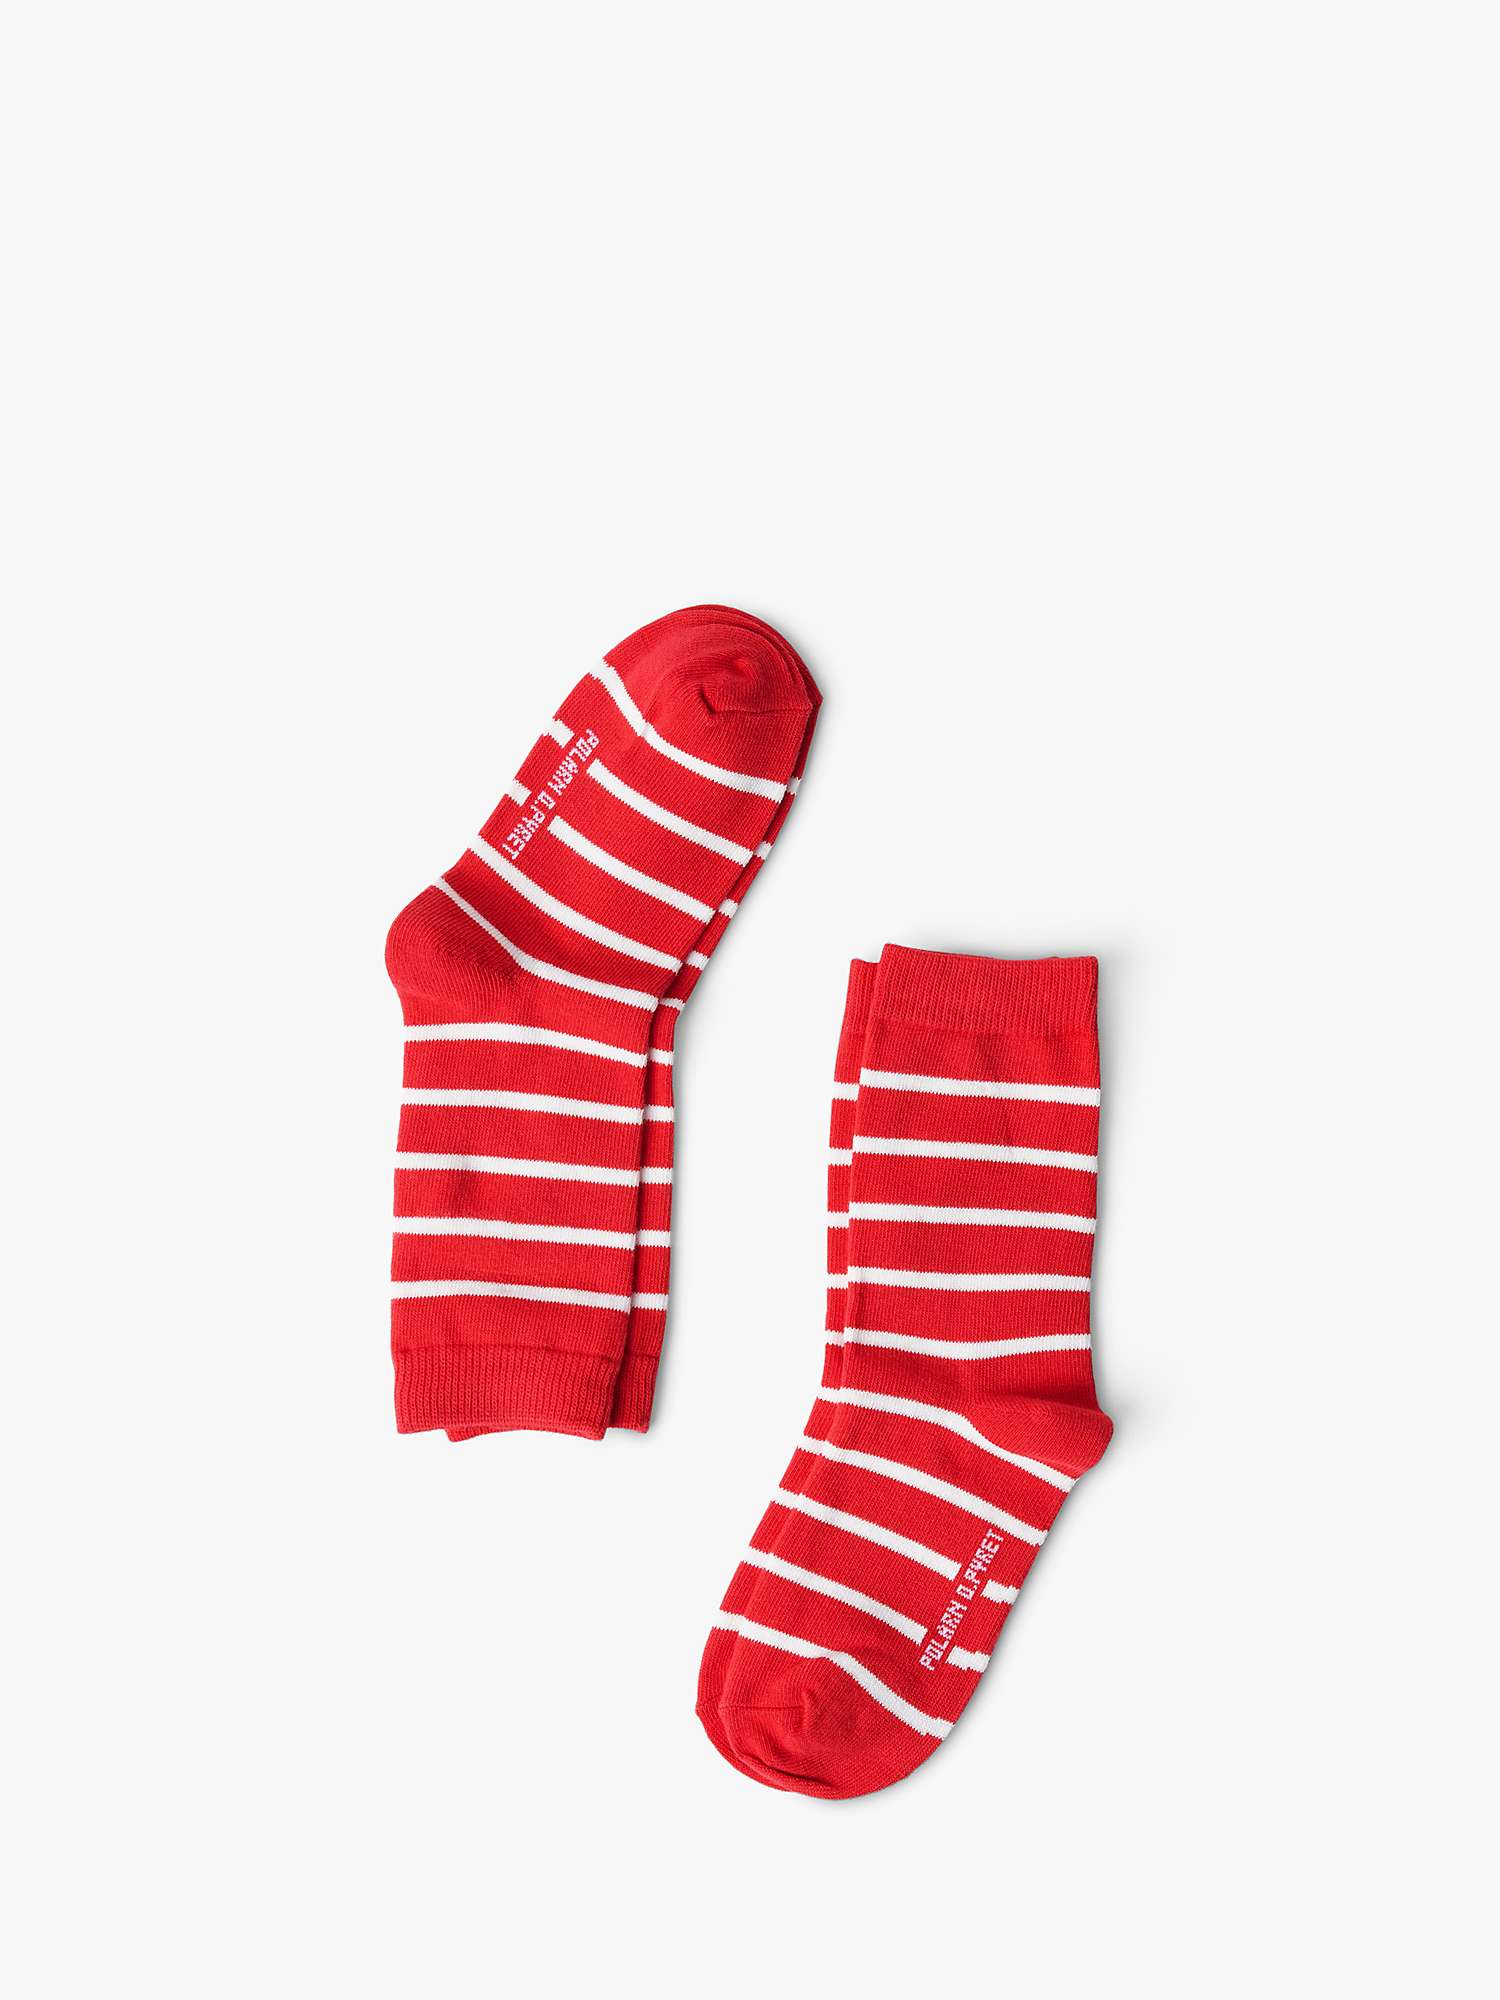 Buy Polarn O. Pyret Kids' Organic Cotton Blend Stripe Socks, Pack of 2, Red Online at johnlewis.com